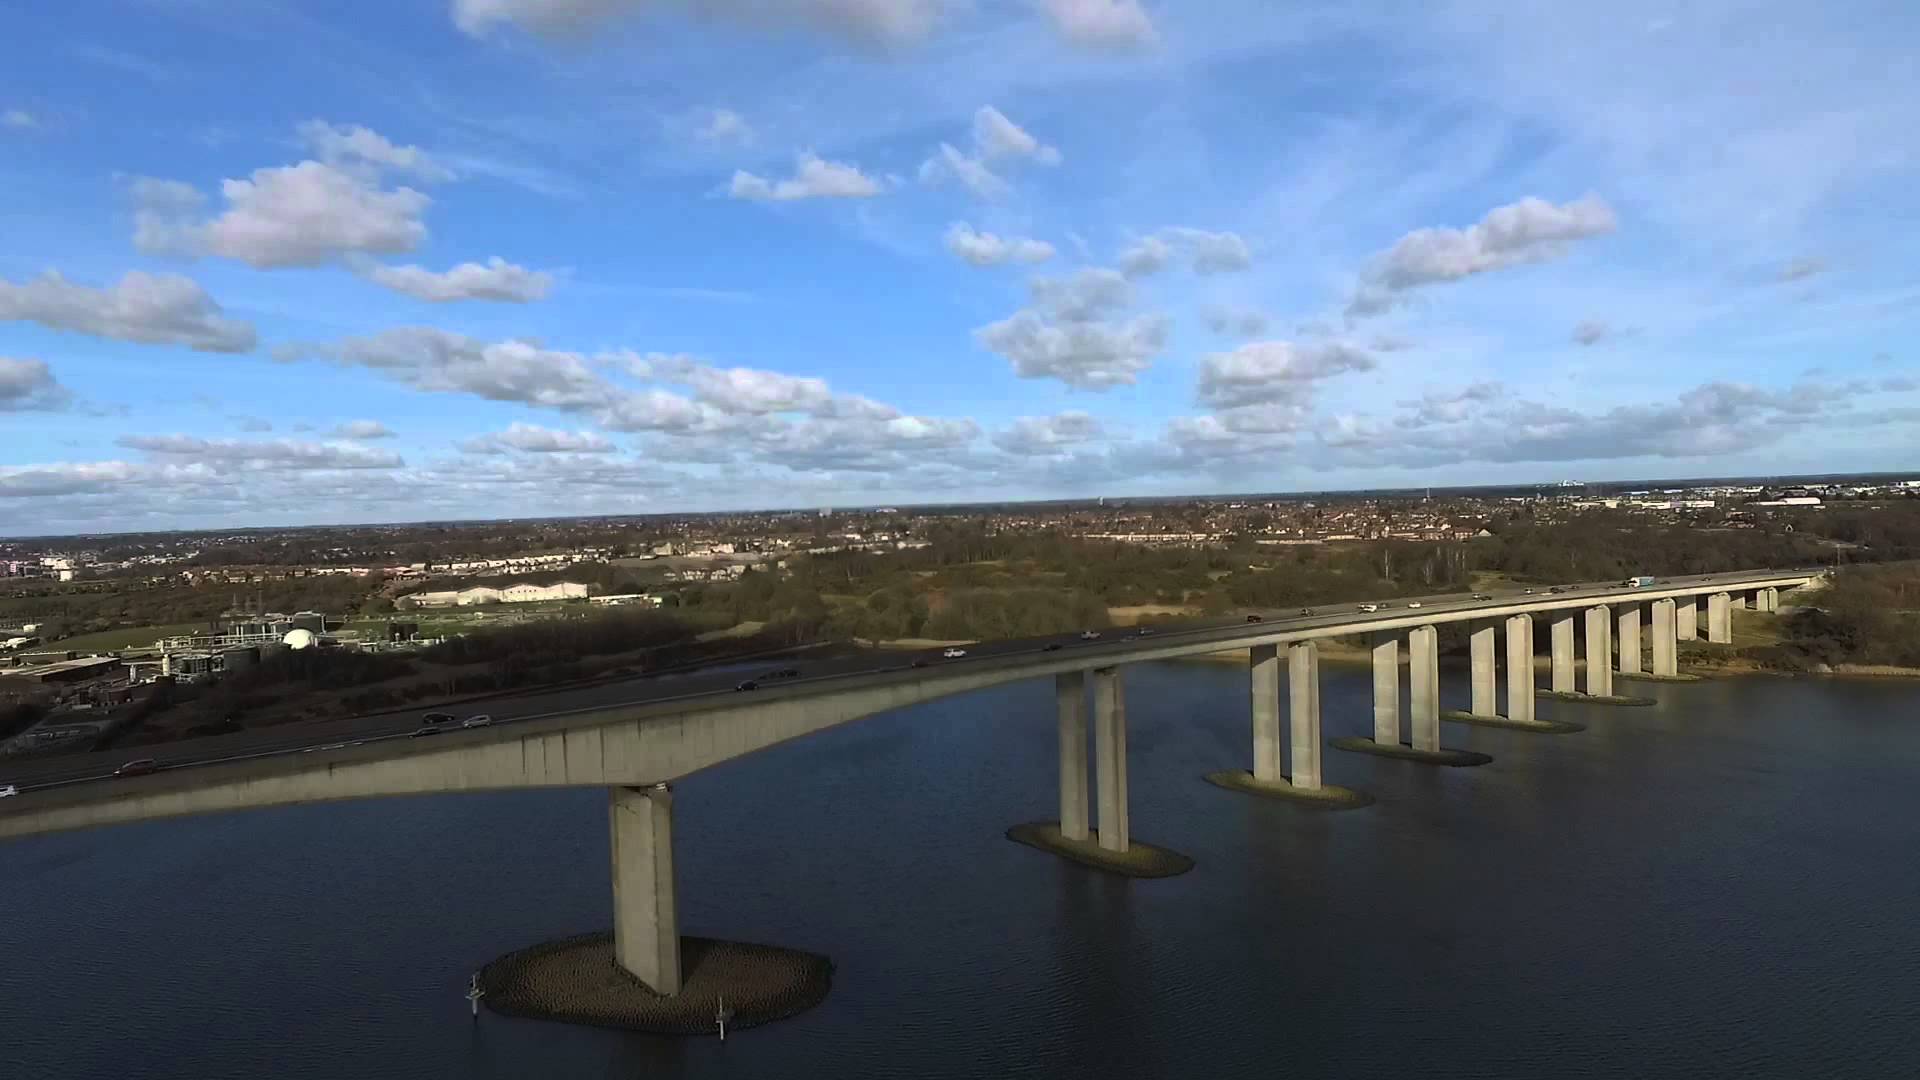 DJI Phantom 3 Advanced - Orwell Bridge, Ipswich, UK - Very windy 15 ...